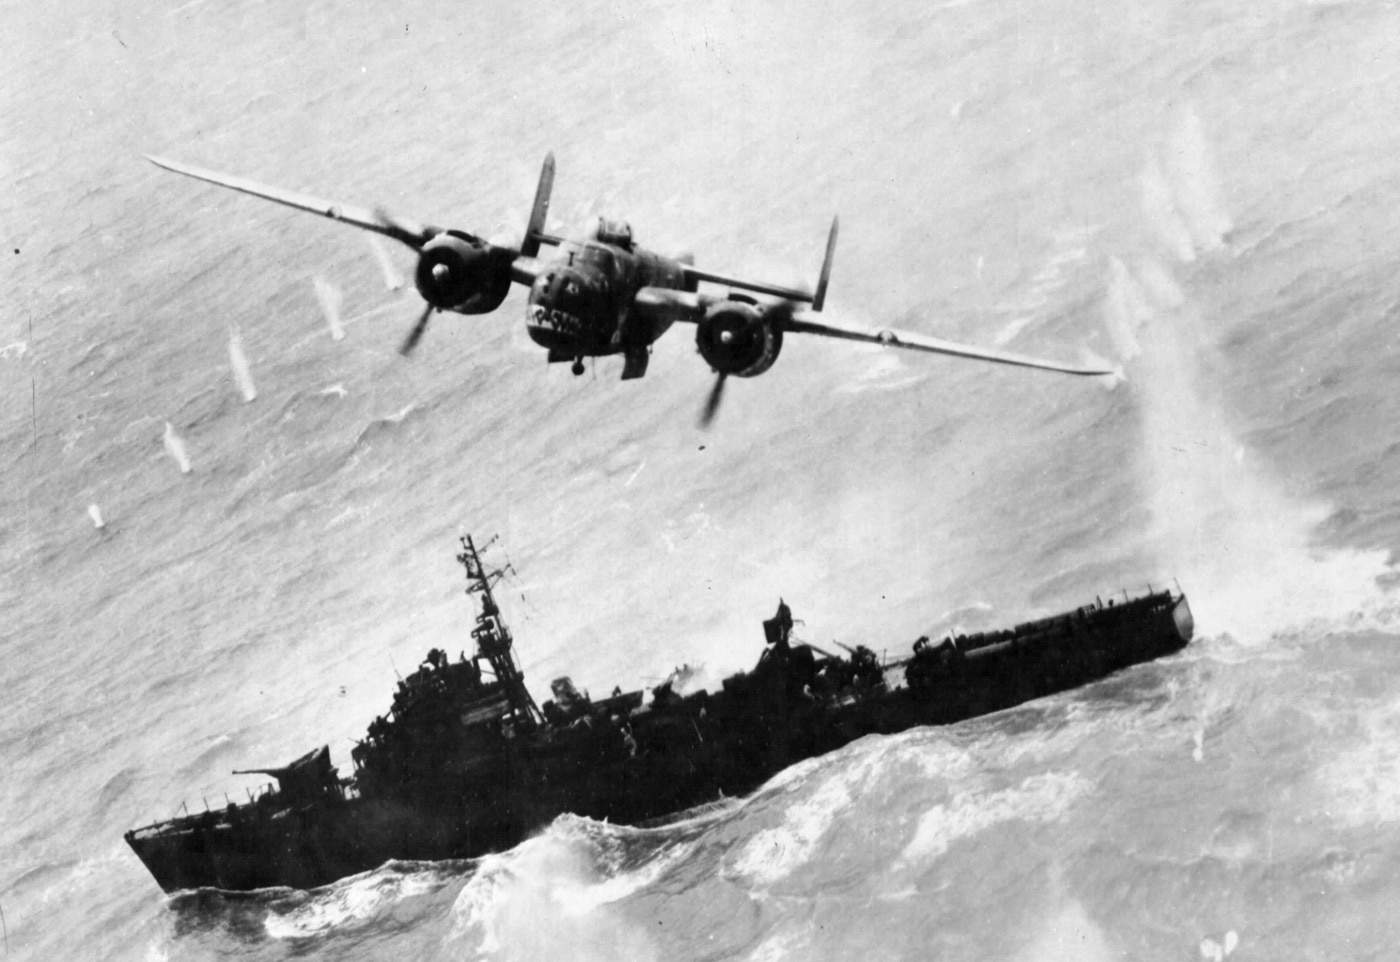 b-25 mitchell gunship strafing a Japanese destroyer